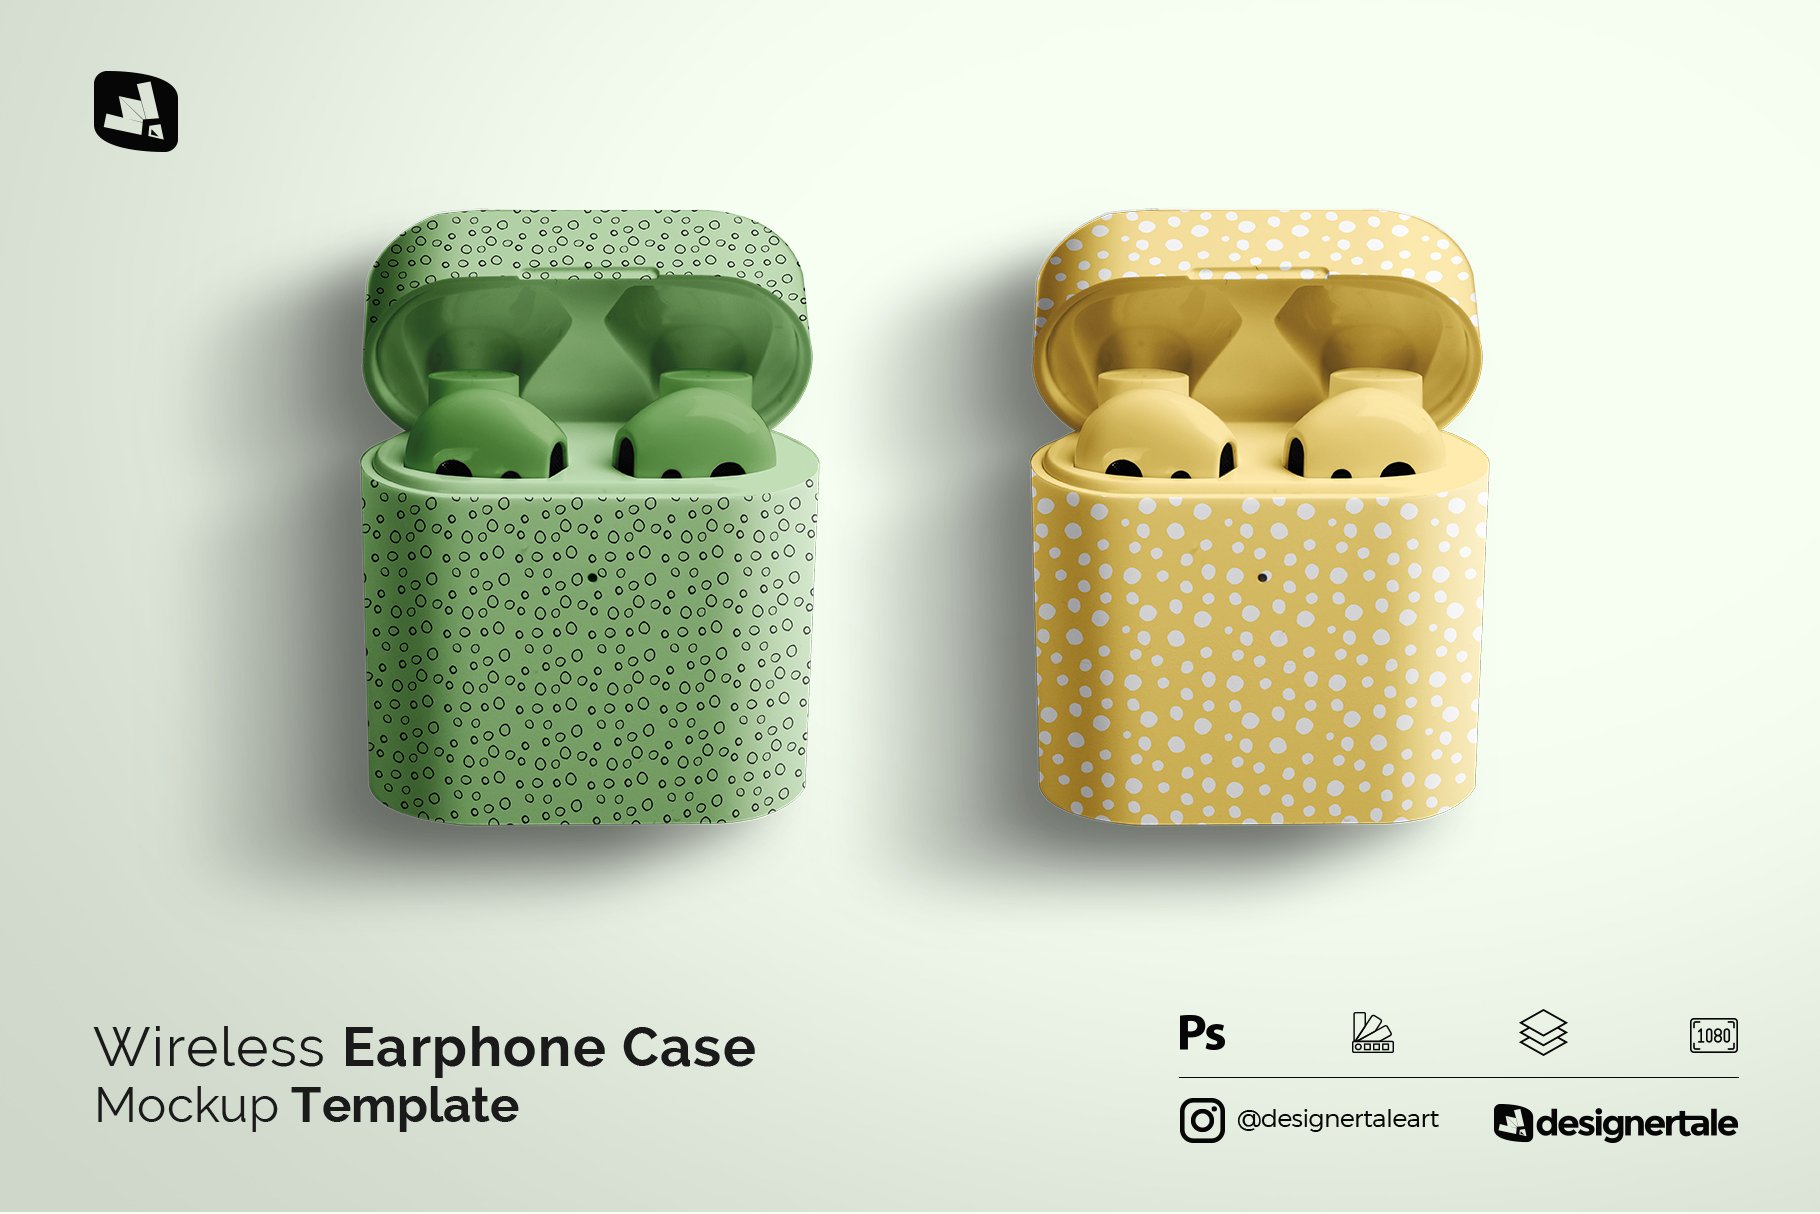 Wireless Earphone Case Mockup cover image.